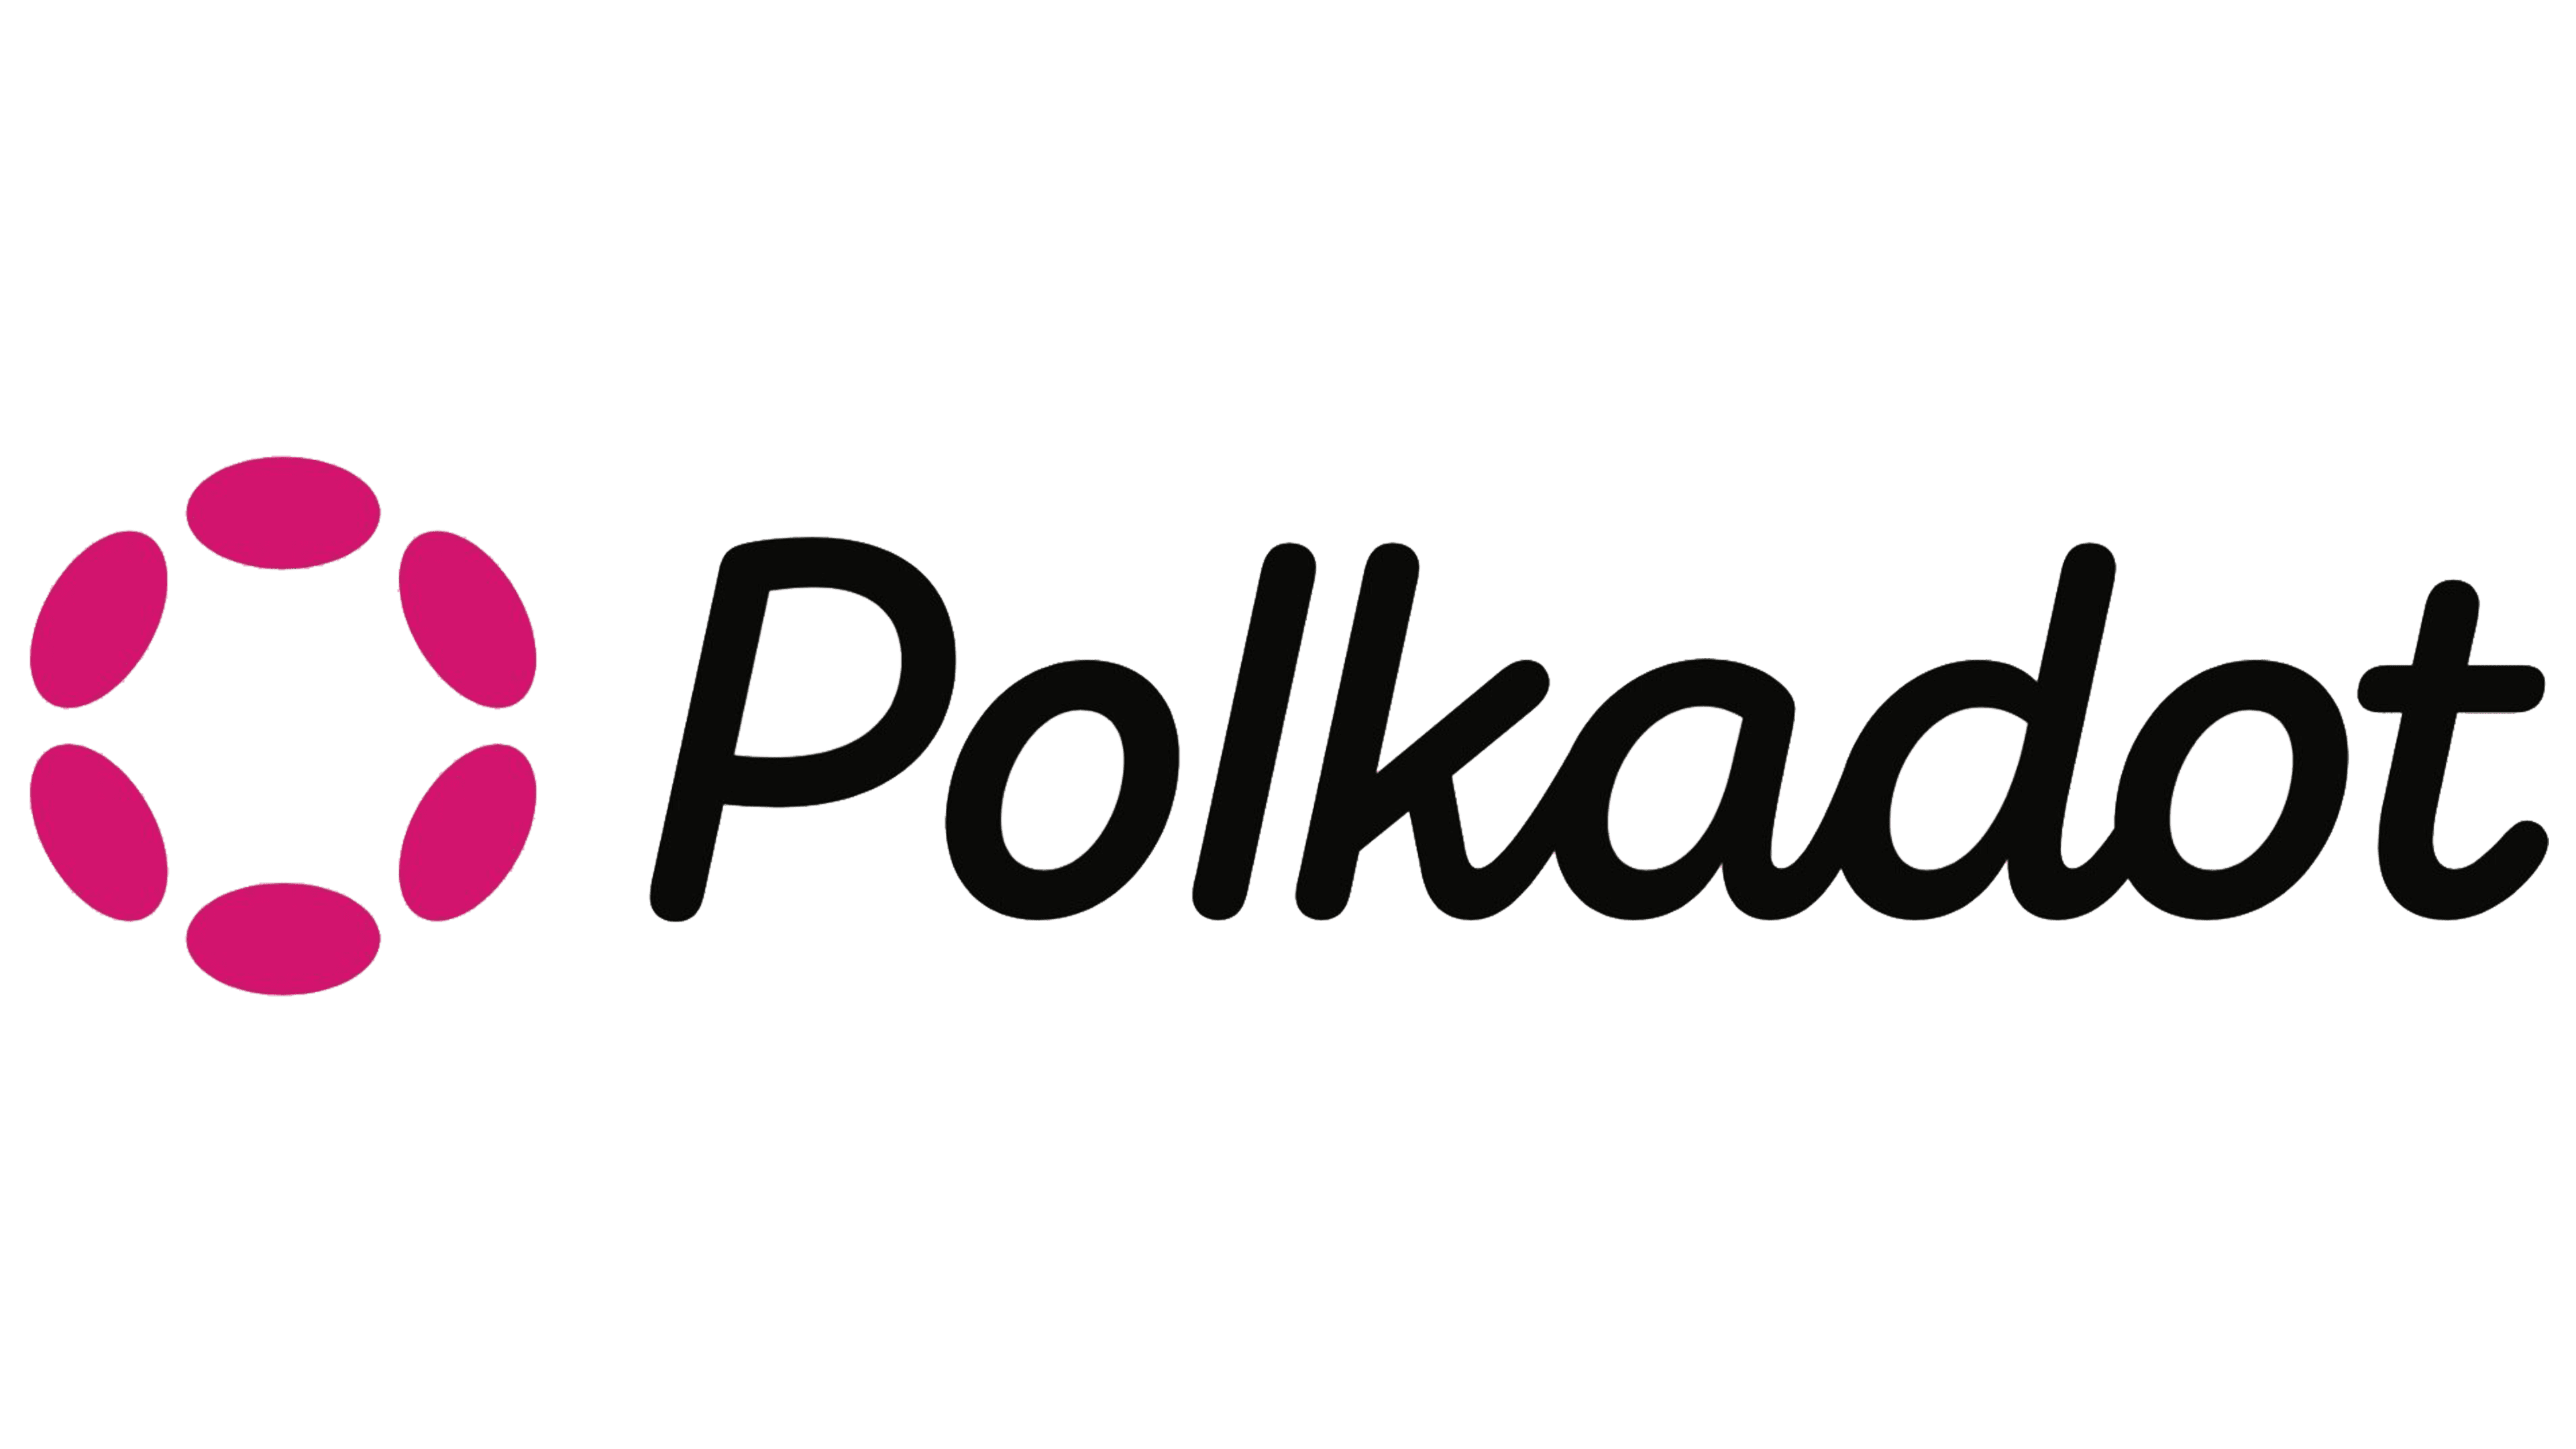 An image of the Polkadot logo.